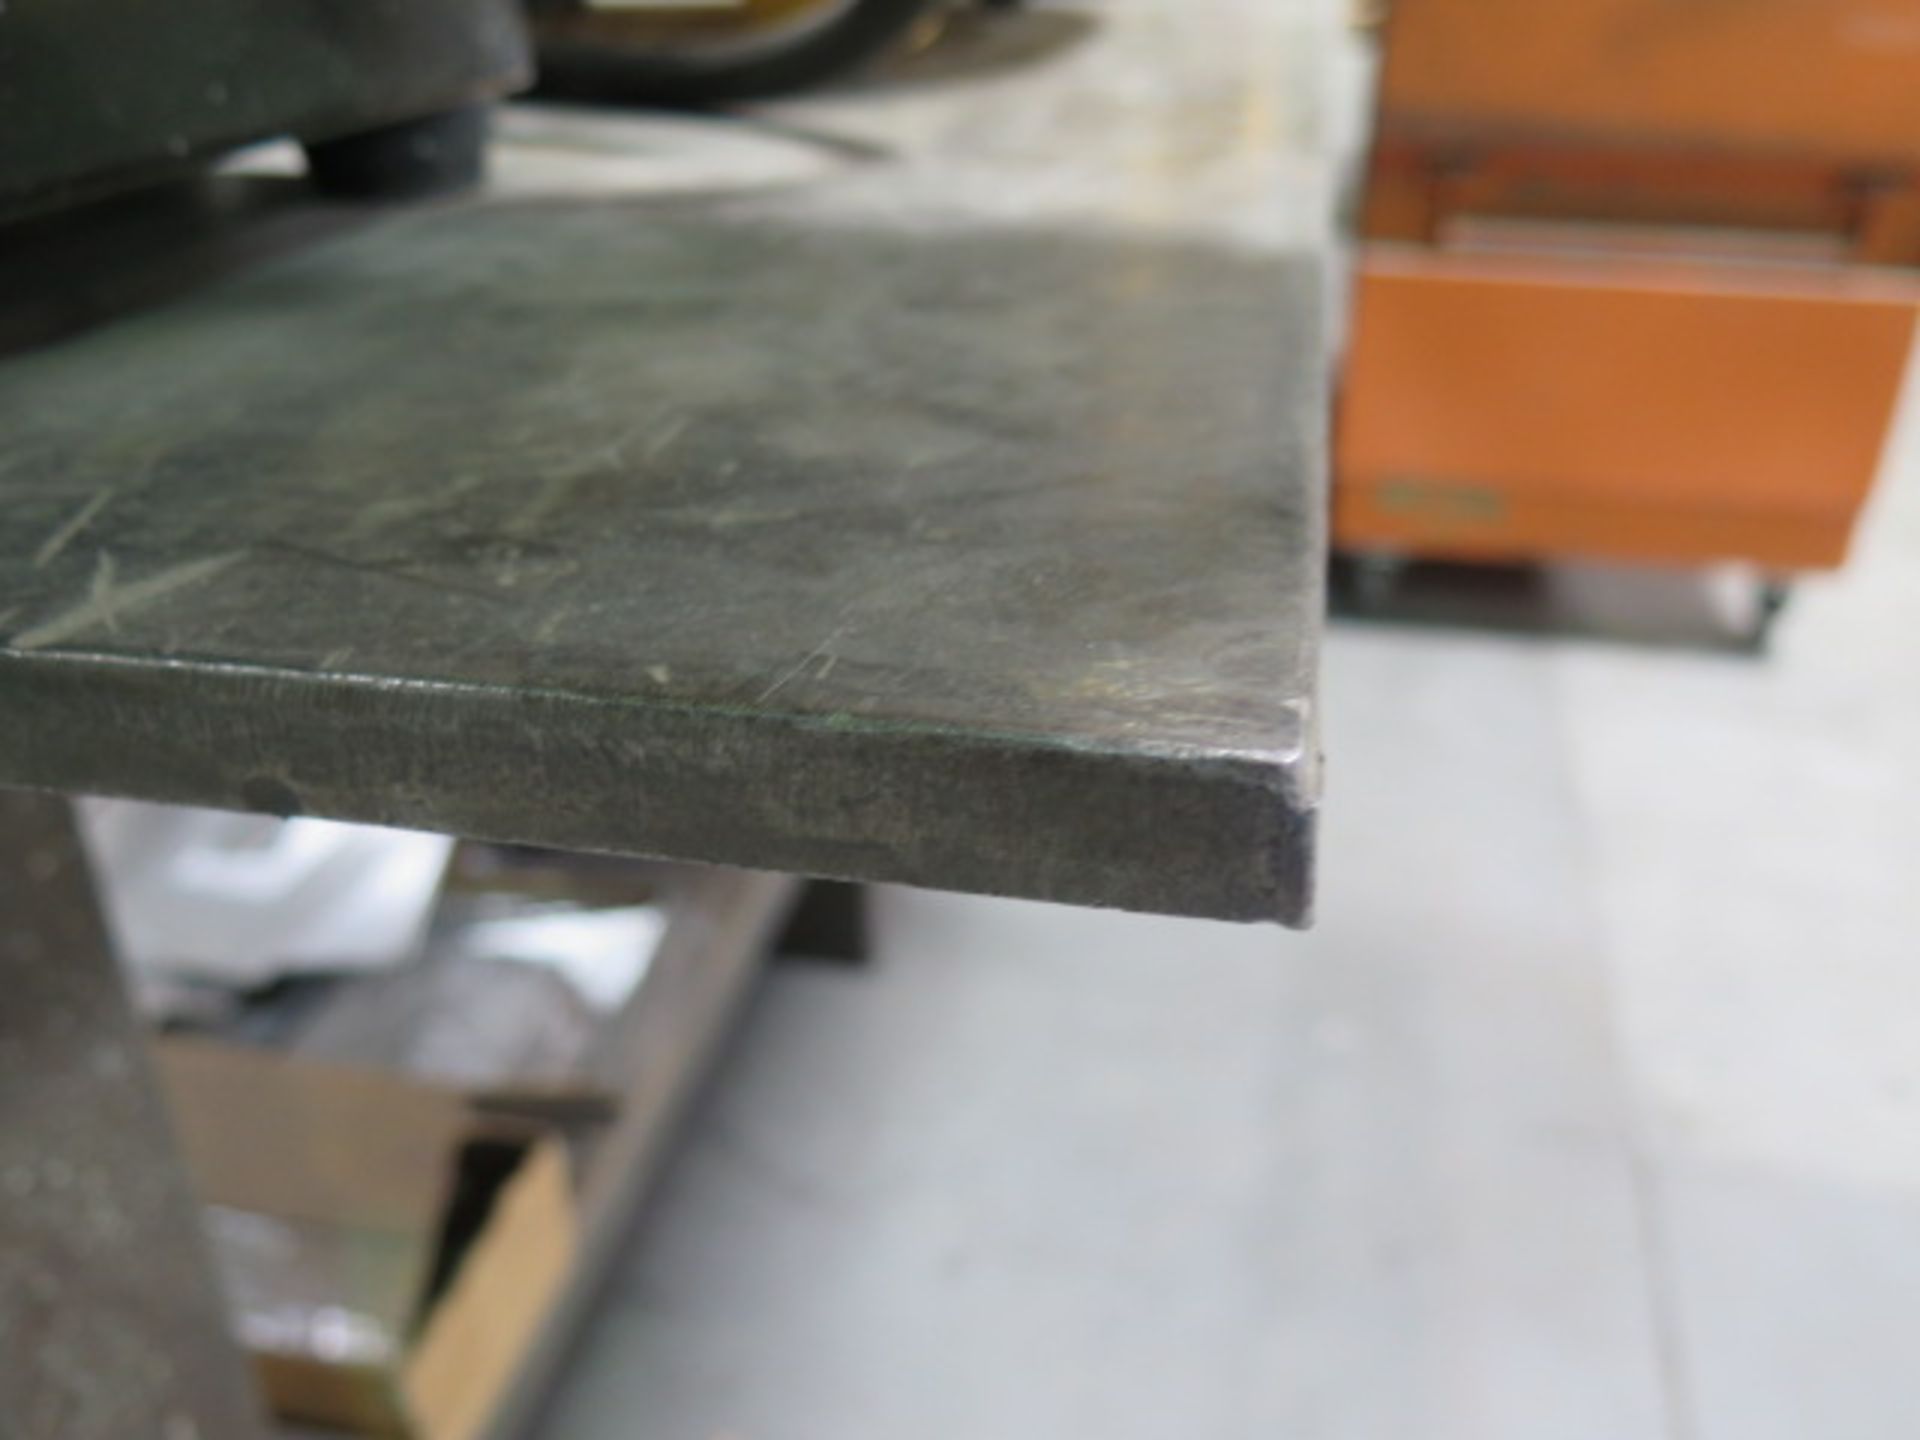 4’ x 8’ x ¾” Steel Welding Table (SOLD AS-IS - NO WARRANTY) - Image 5 of 6